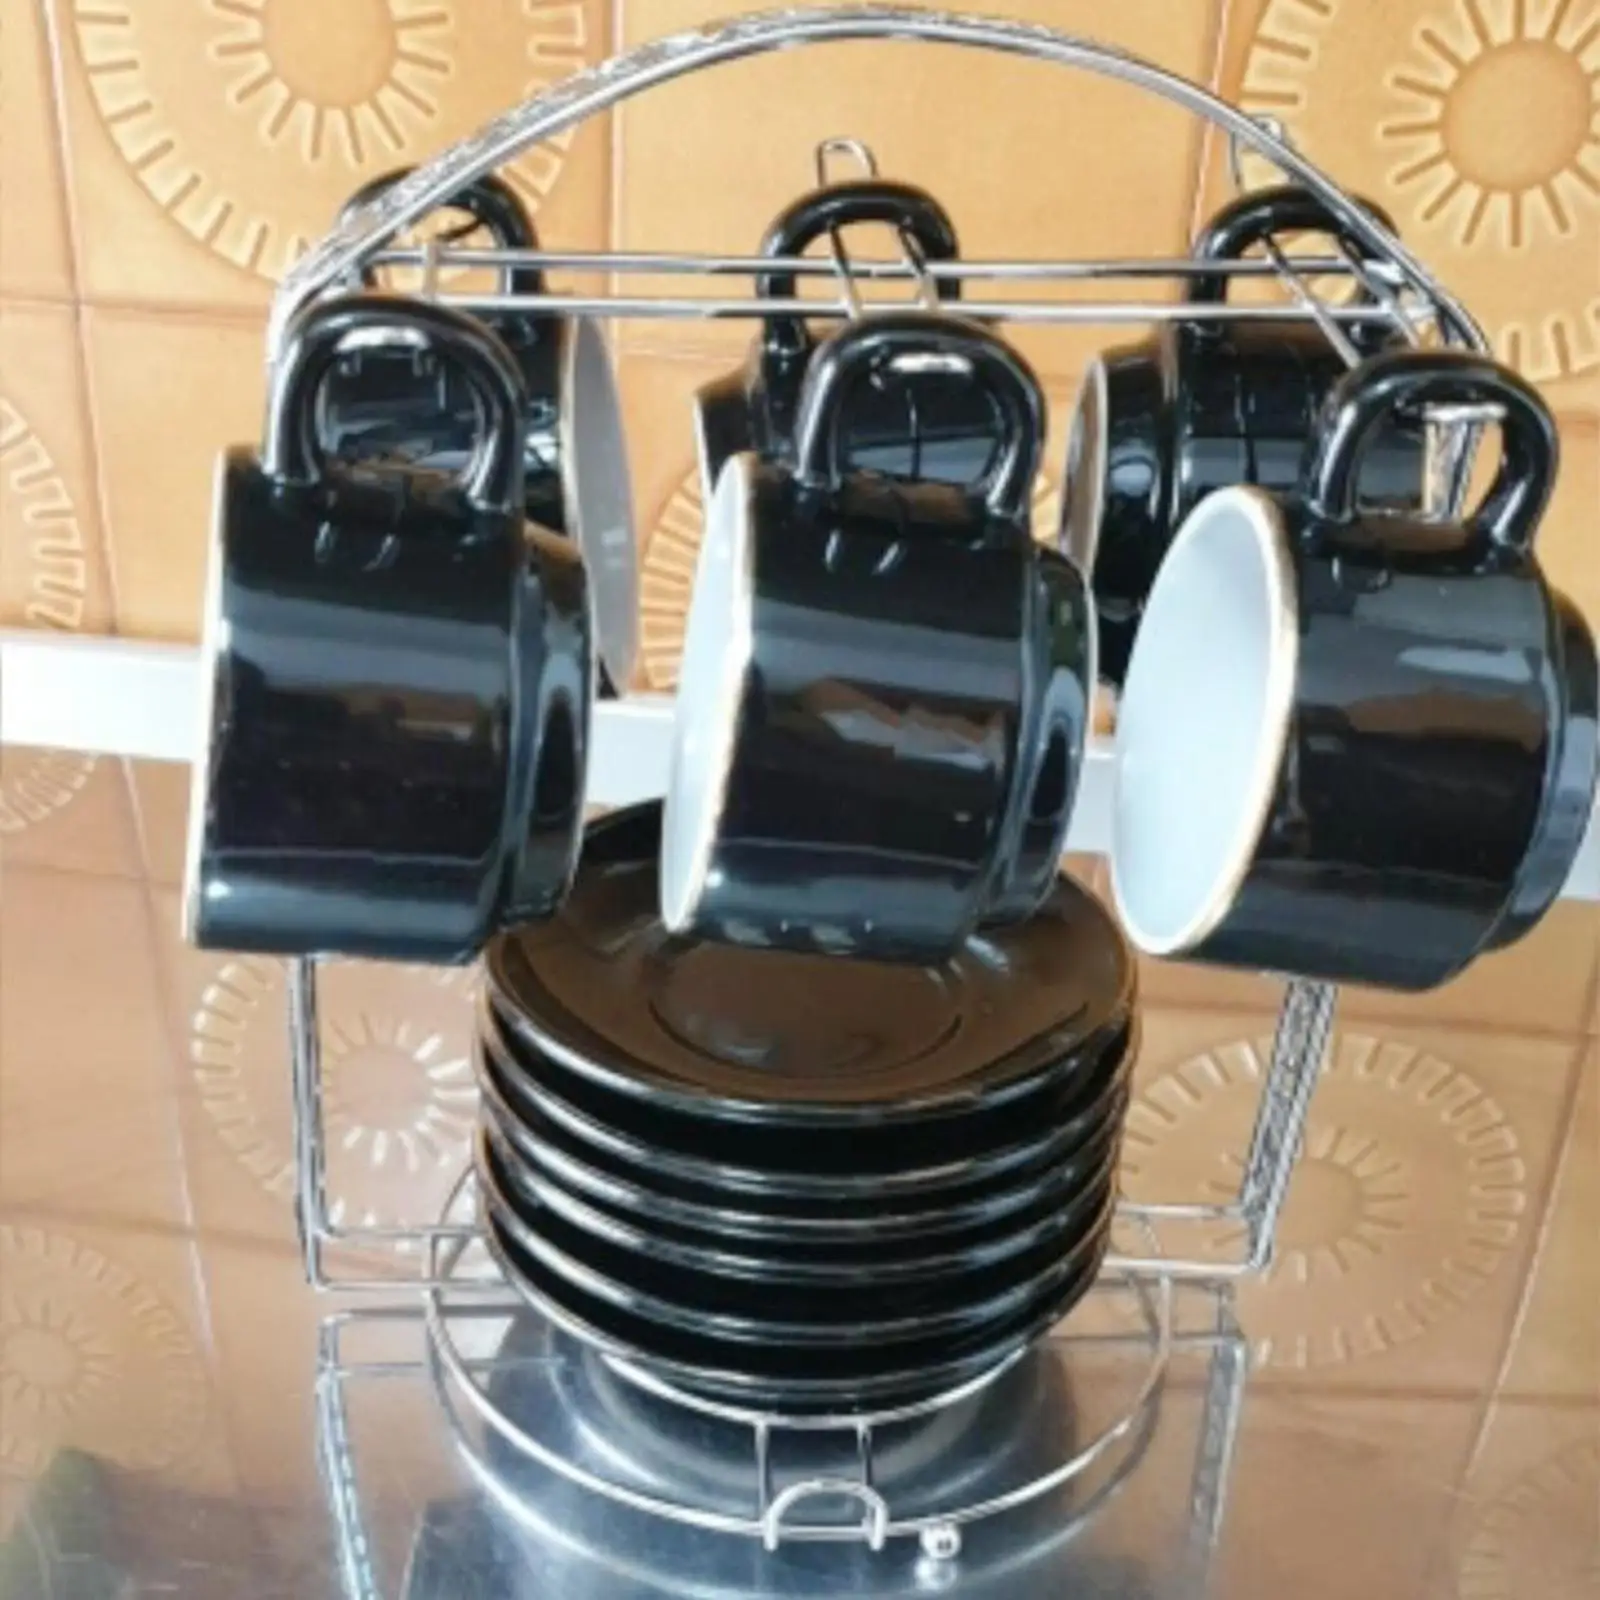 https://ae01.alicdn.com/kf/Scac0feac81f84b369d39199b85b6b35a4/Cup-Rack-Storage-Display-Stand-Coffee-Cup-Holder-Organizer-Mug-Holder-Tree-Plate-Holder-Cup-Hob.jpg